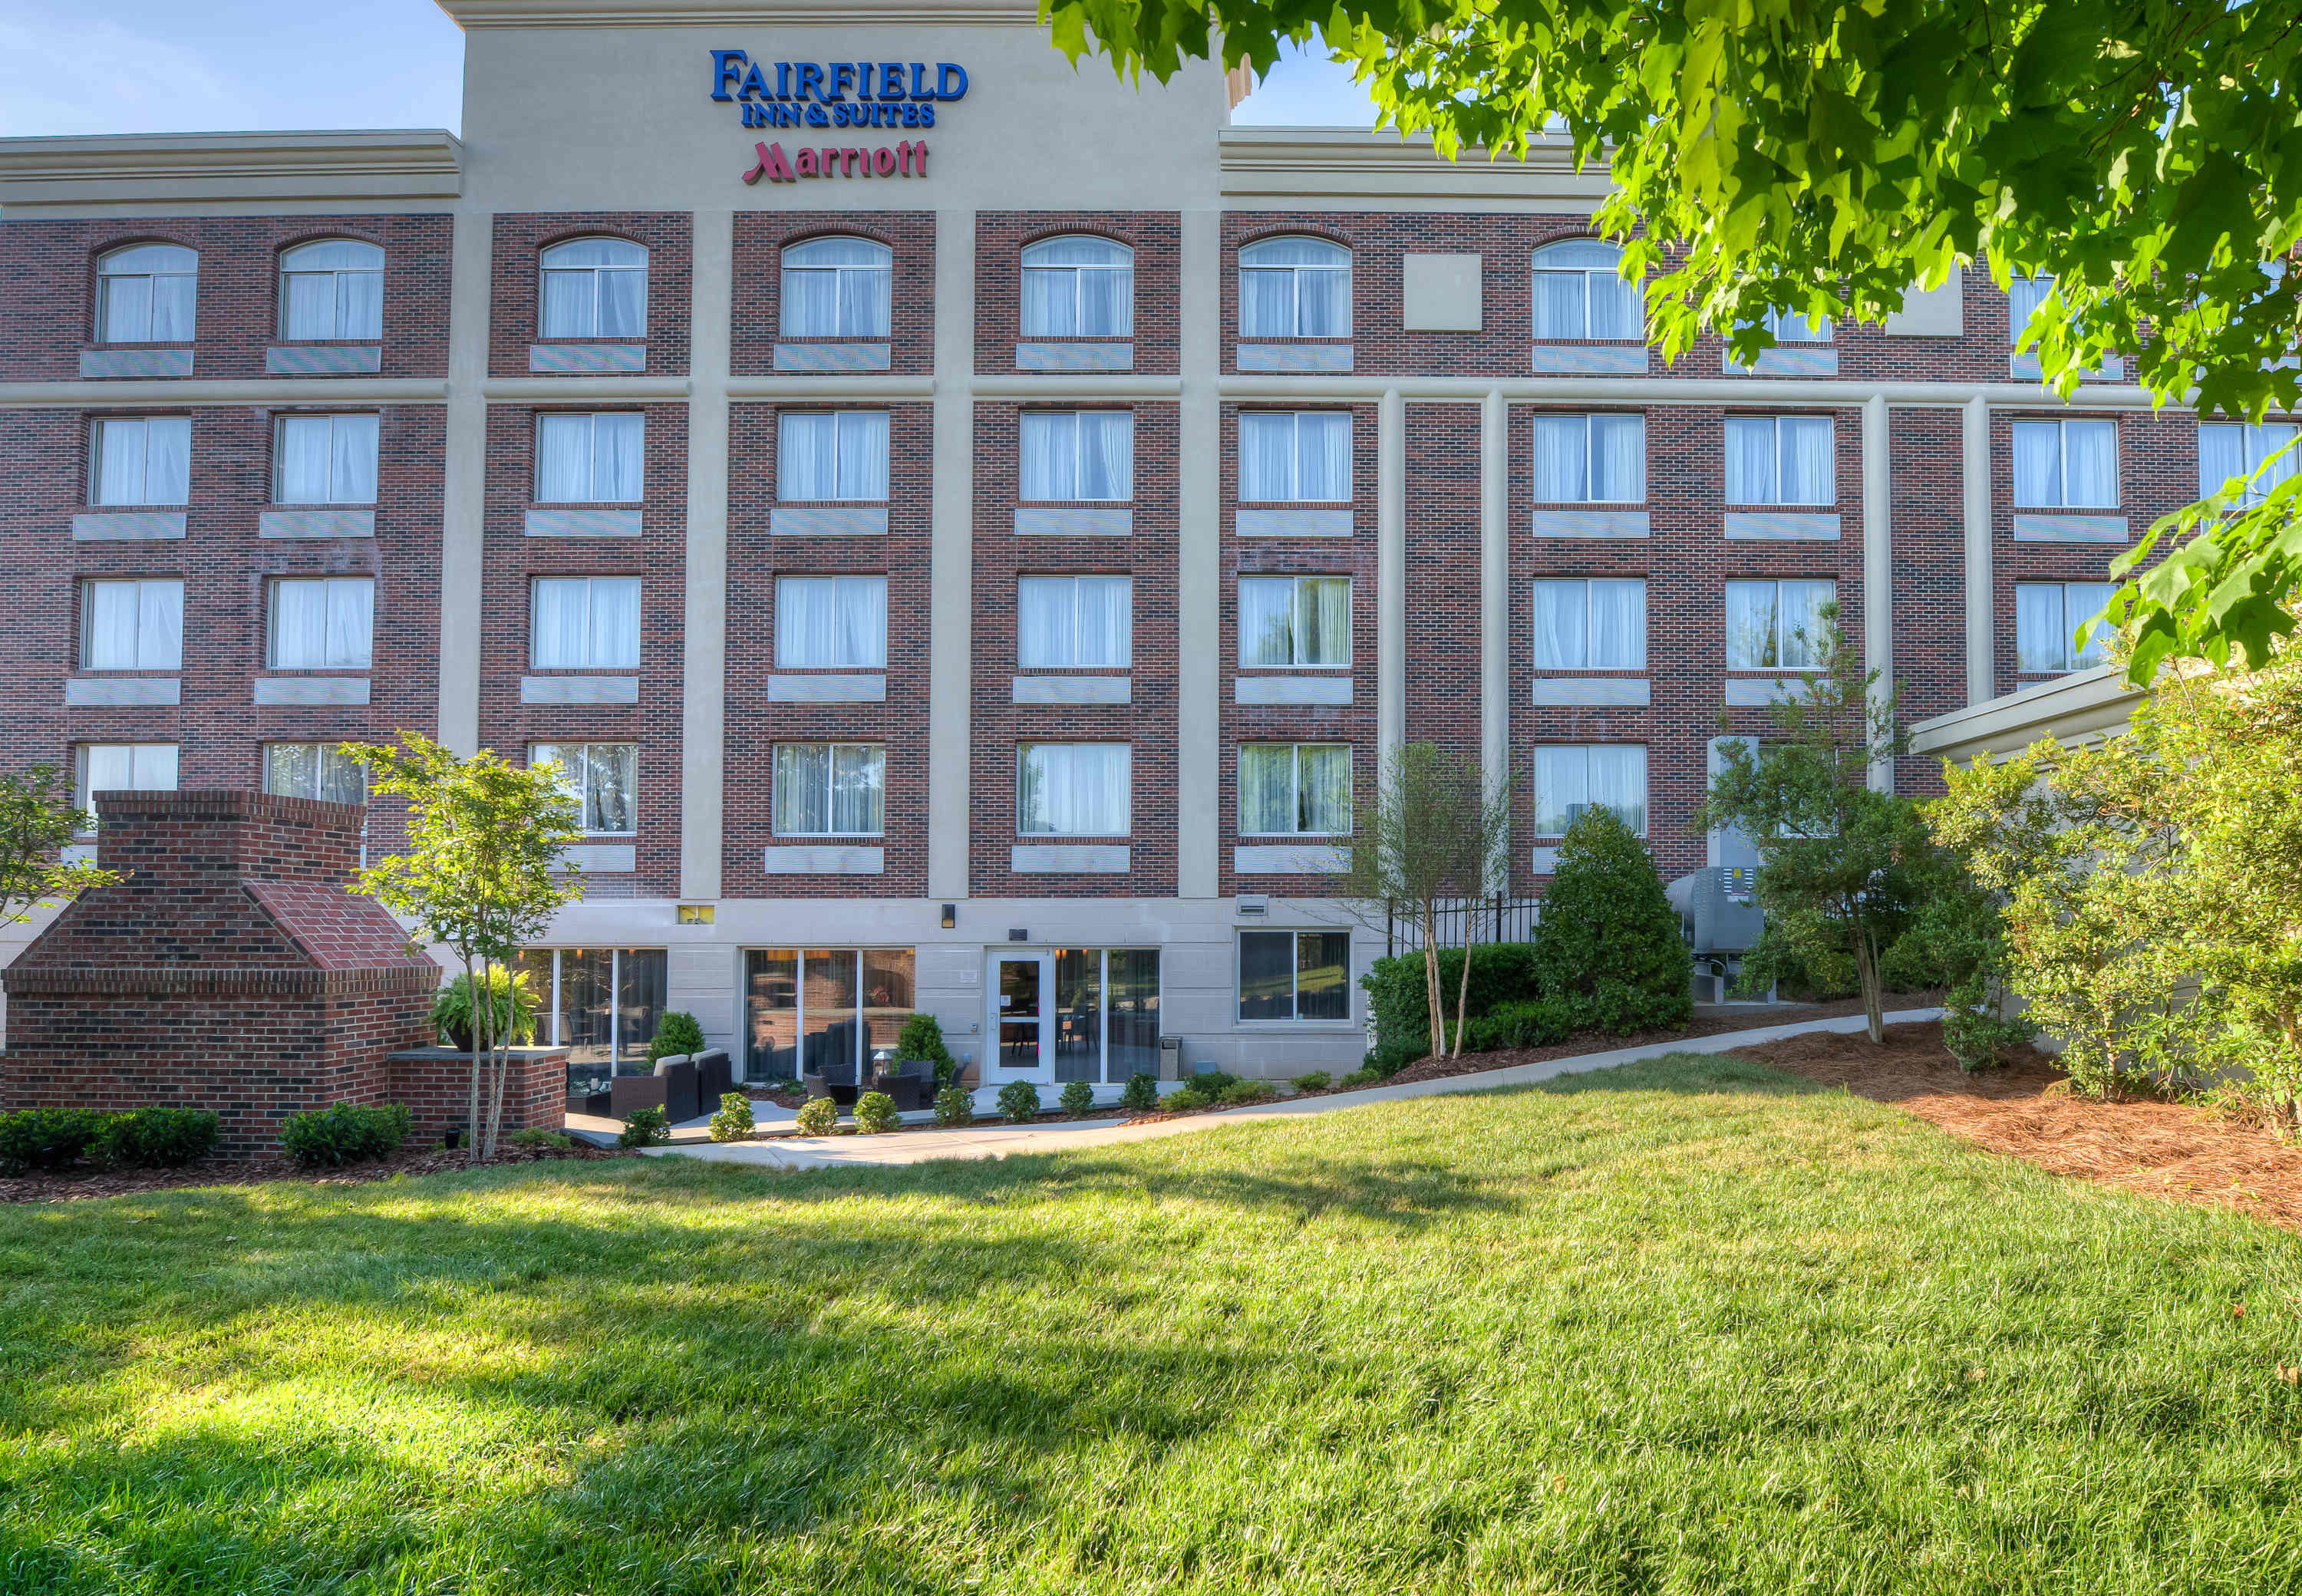 Photo of Fairfield Inn & Suites Winston-Salem Downtown, Winston-Salem, NC